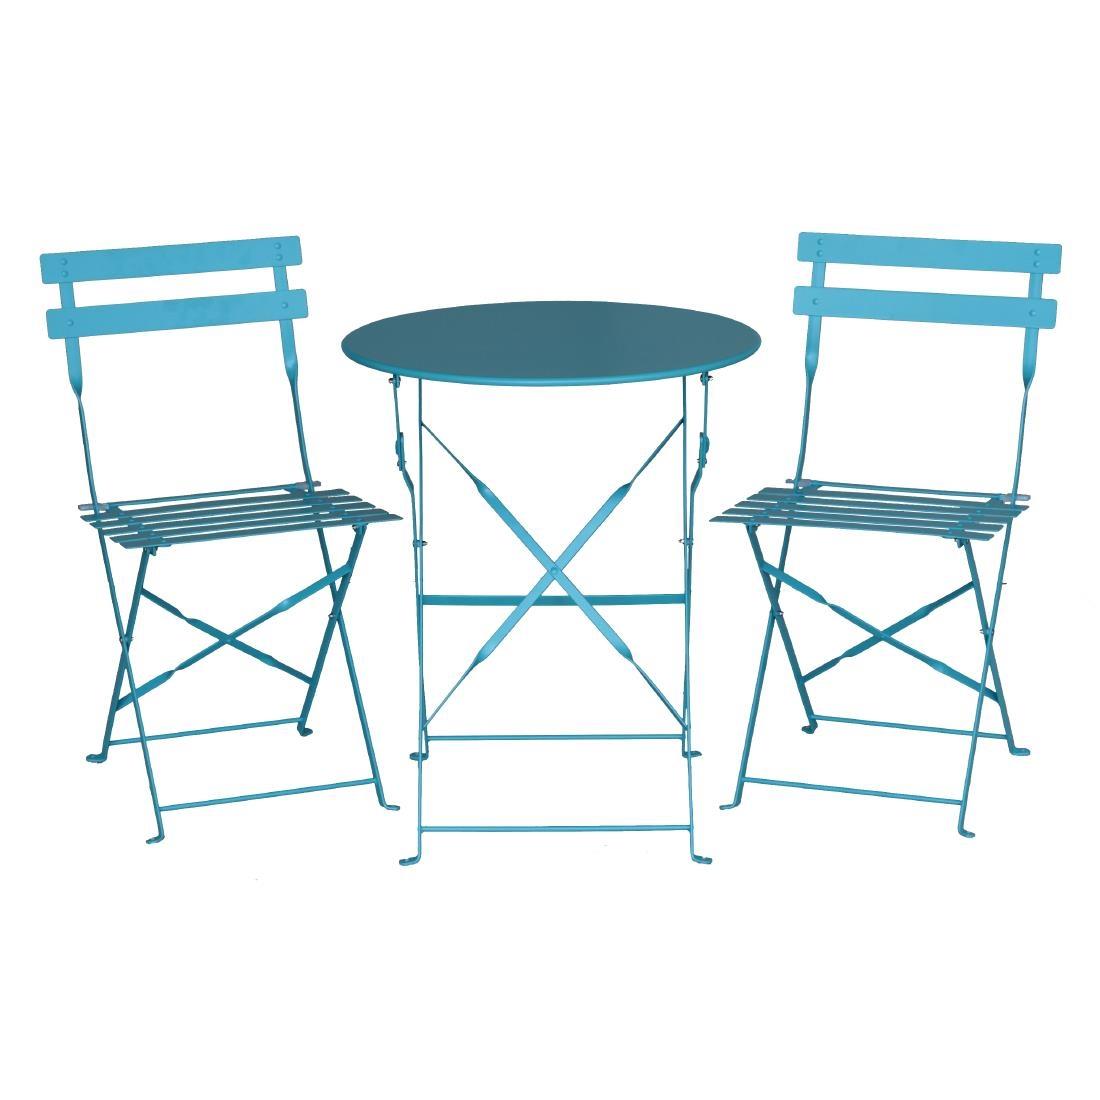 Bolero Pavement Style Steel Chairs Seaside Blue (Pack of 2) - GK982  - 4